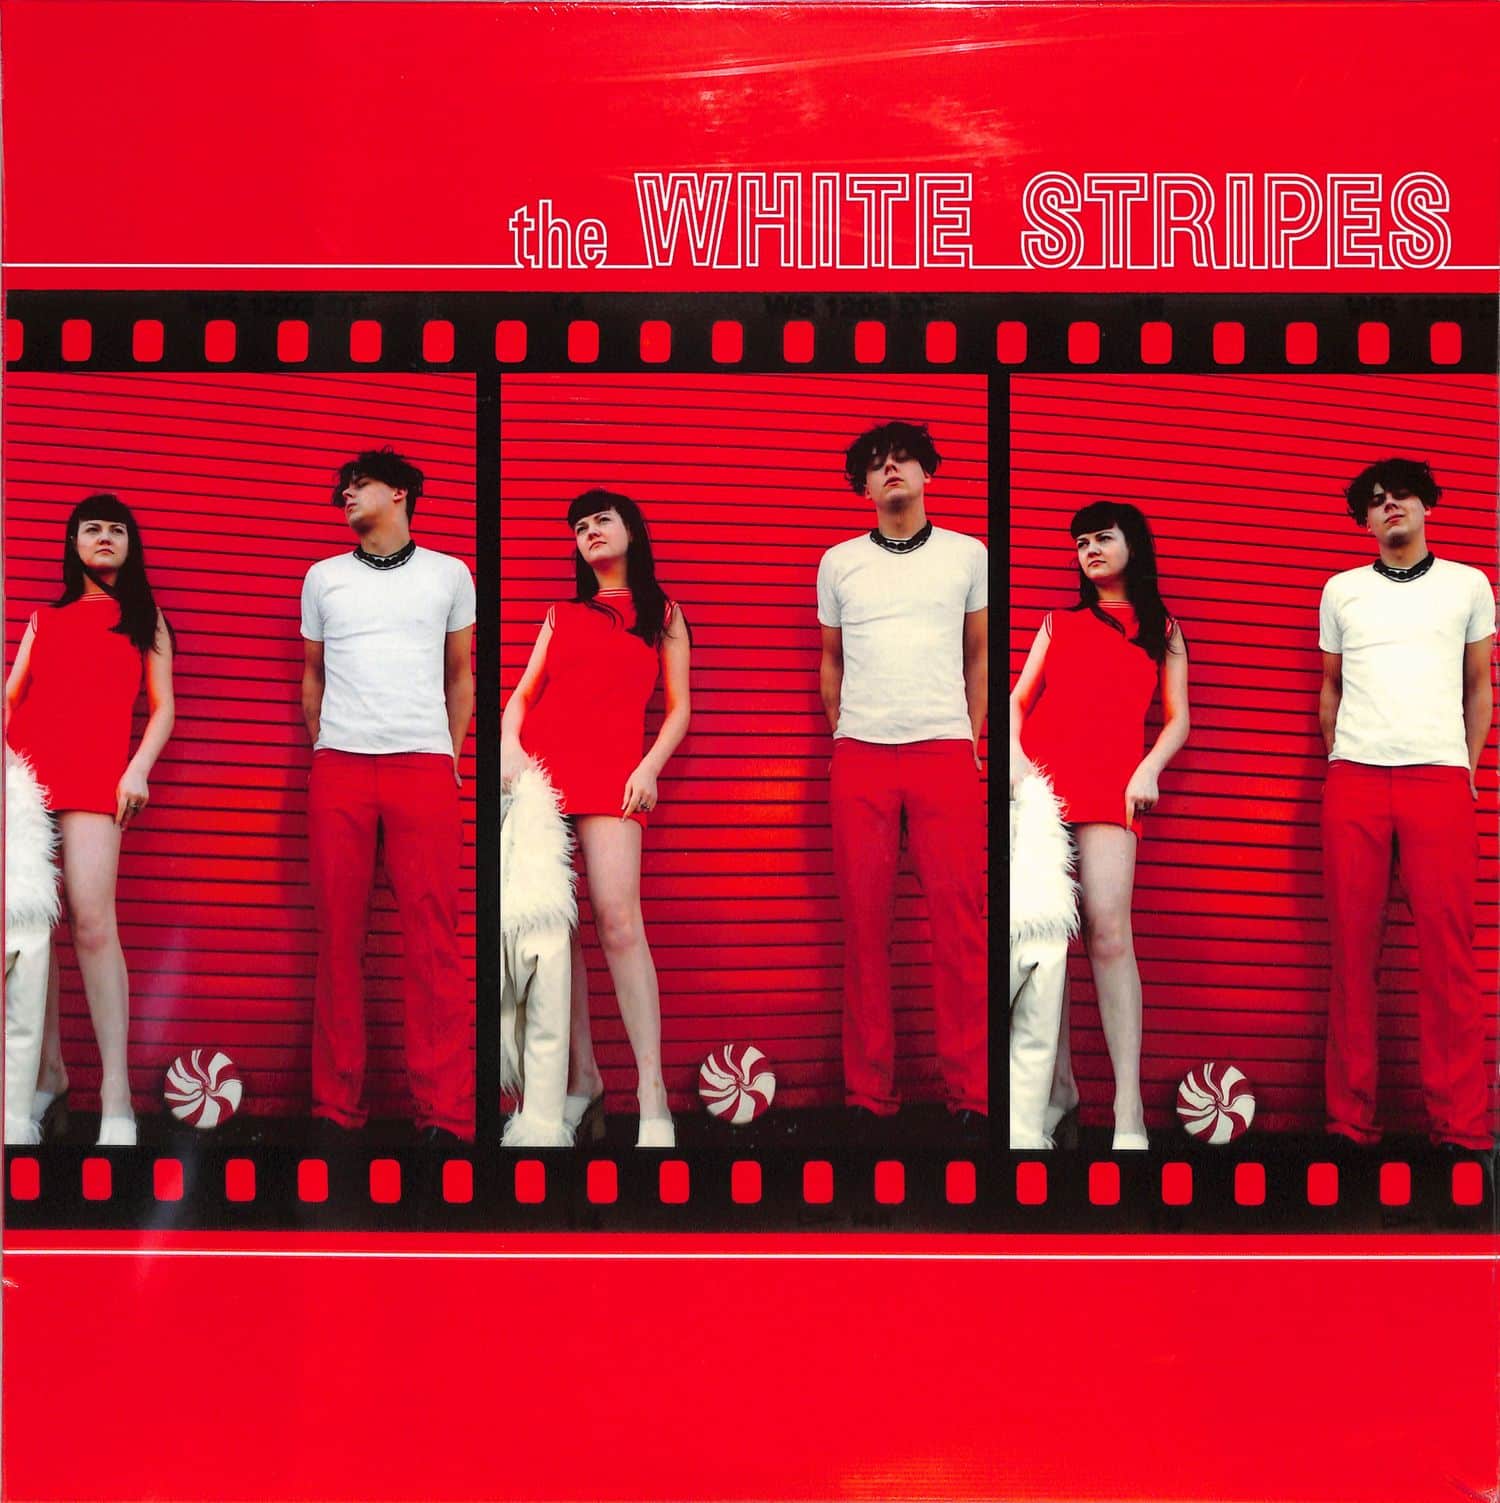 The White Stripes - THE WHITE STRIPES 